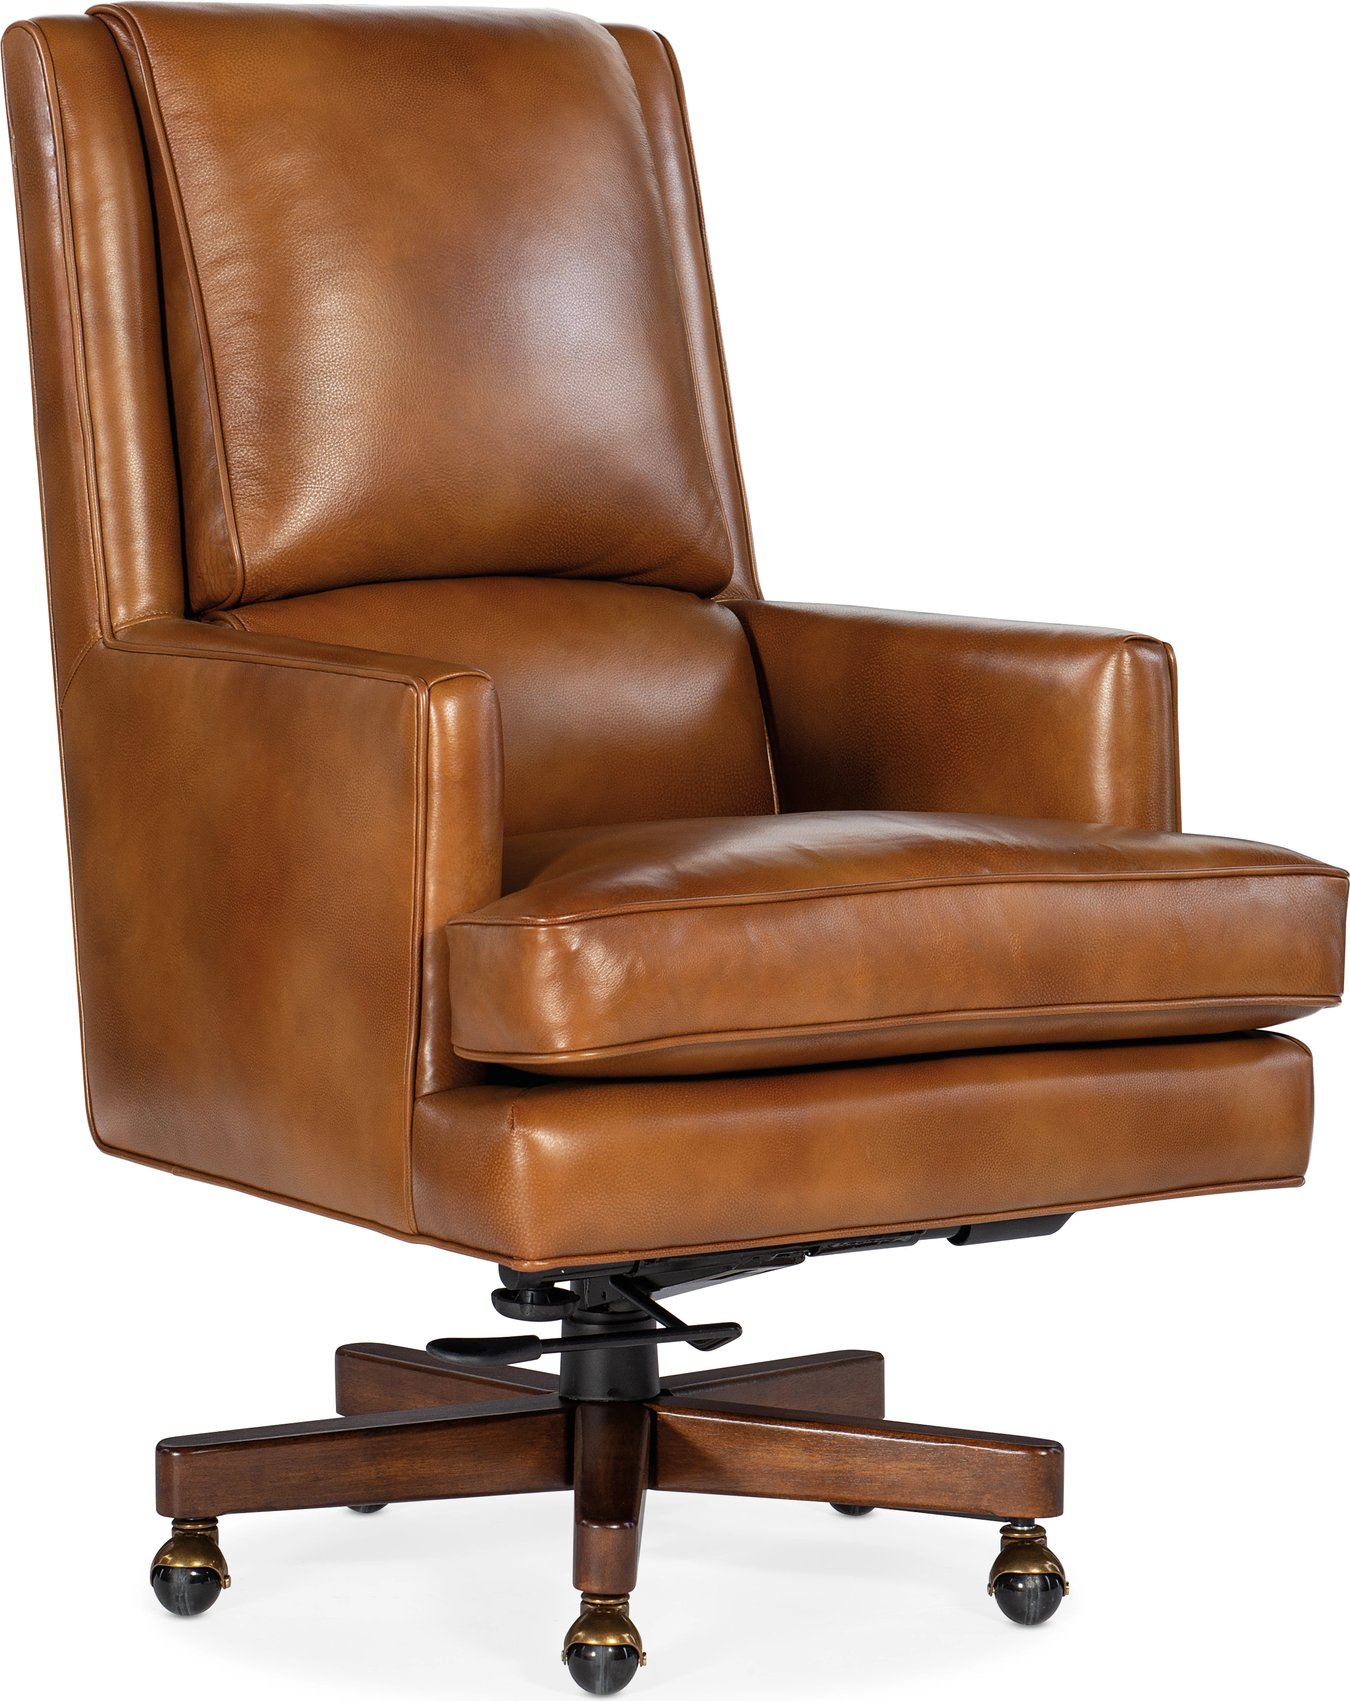 Hooker Furniture Wright Executive Swivel Tilt Chair | Layla Grayce